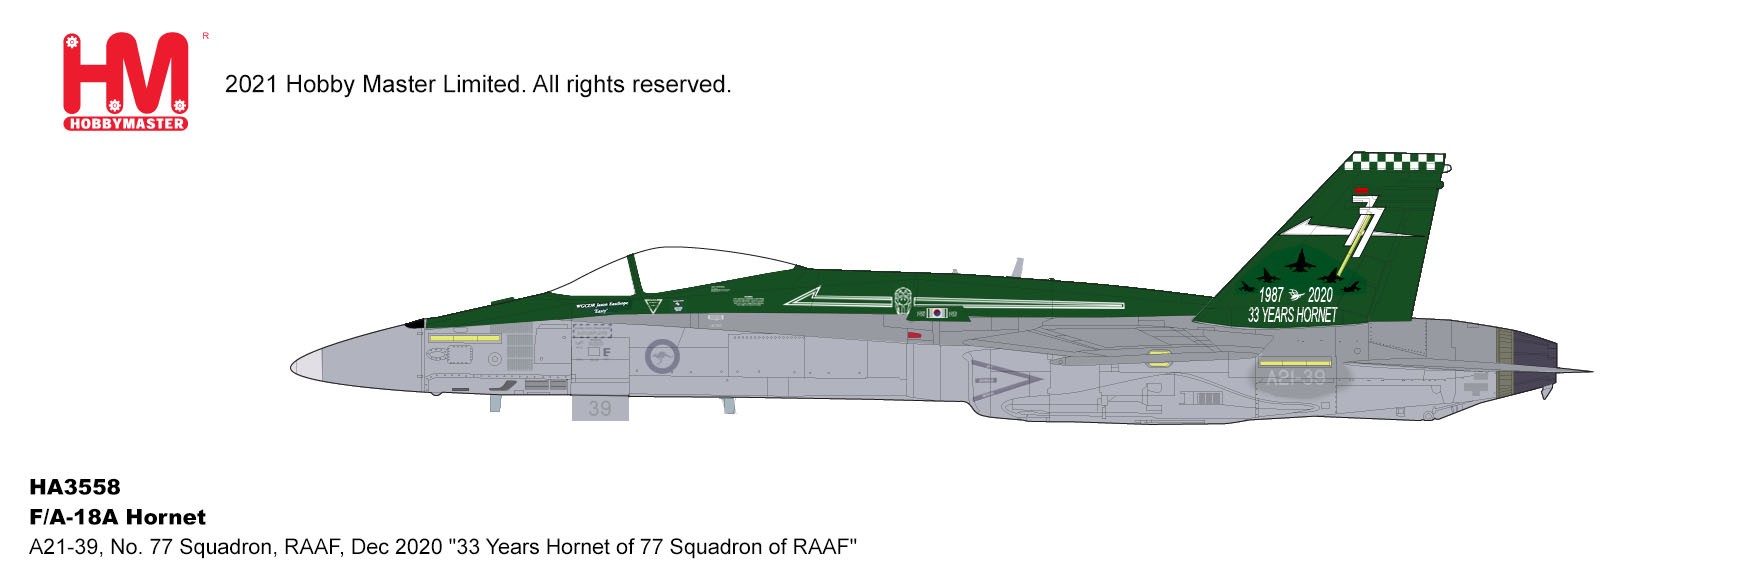 F/A-18A Hornet Royal Australian Air Force, No. 77 Sqn, Dec. 2020, "33 Years Hornet of 77 Squadron" (1:72)